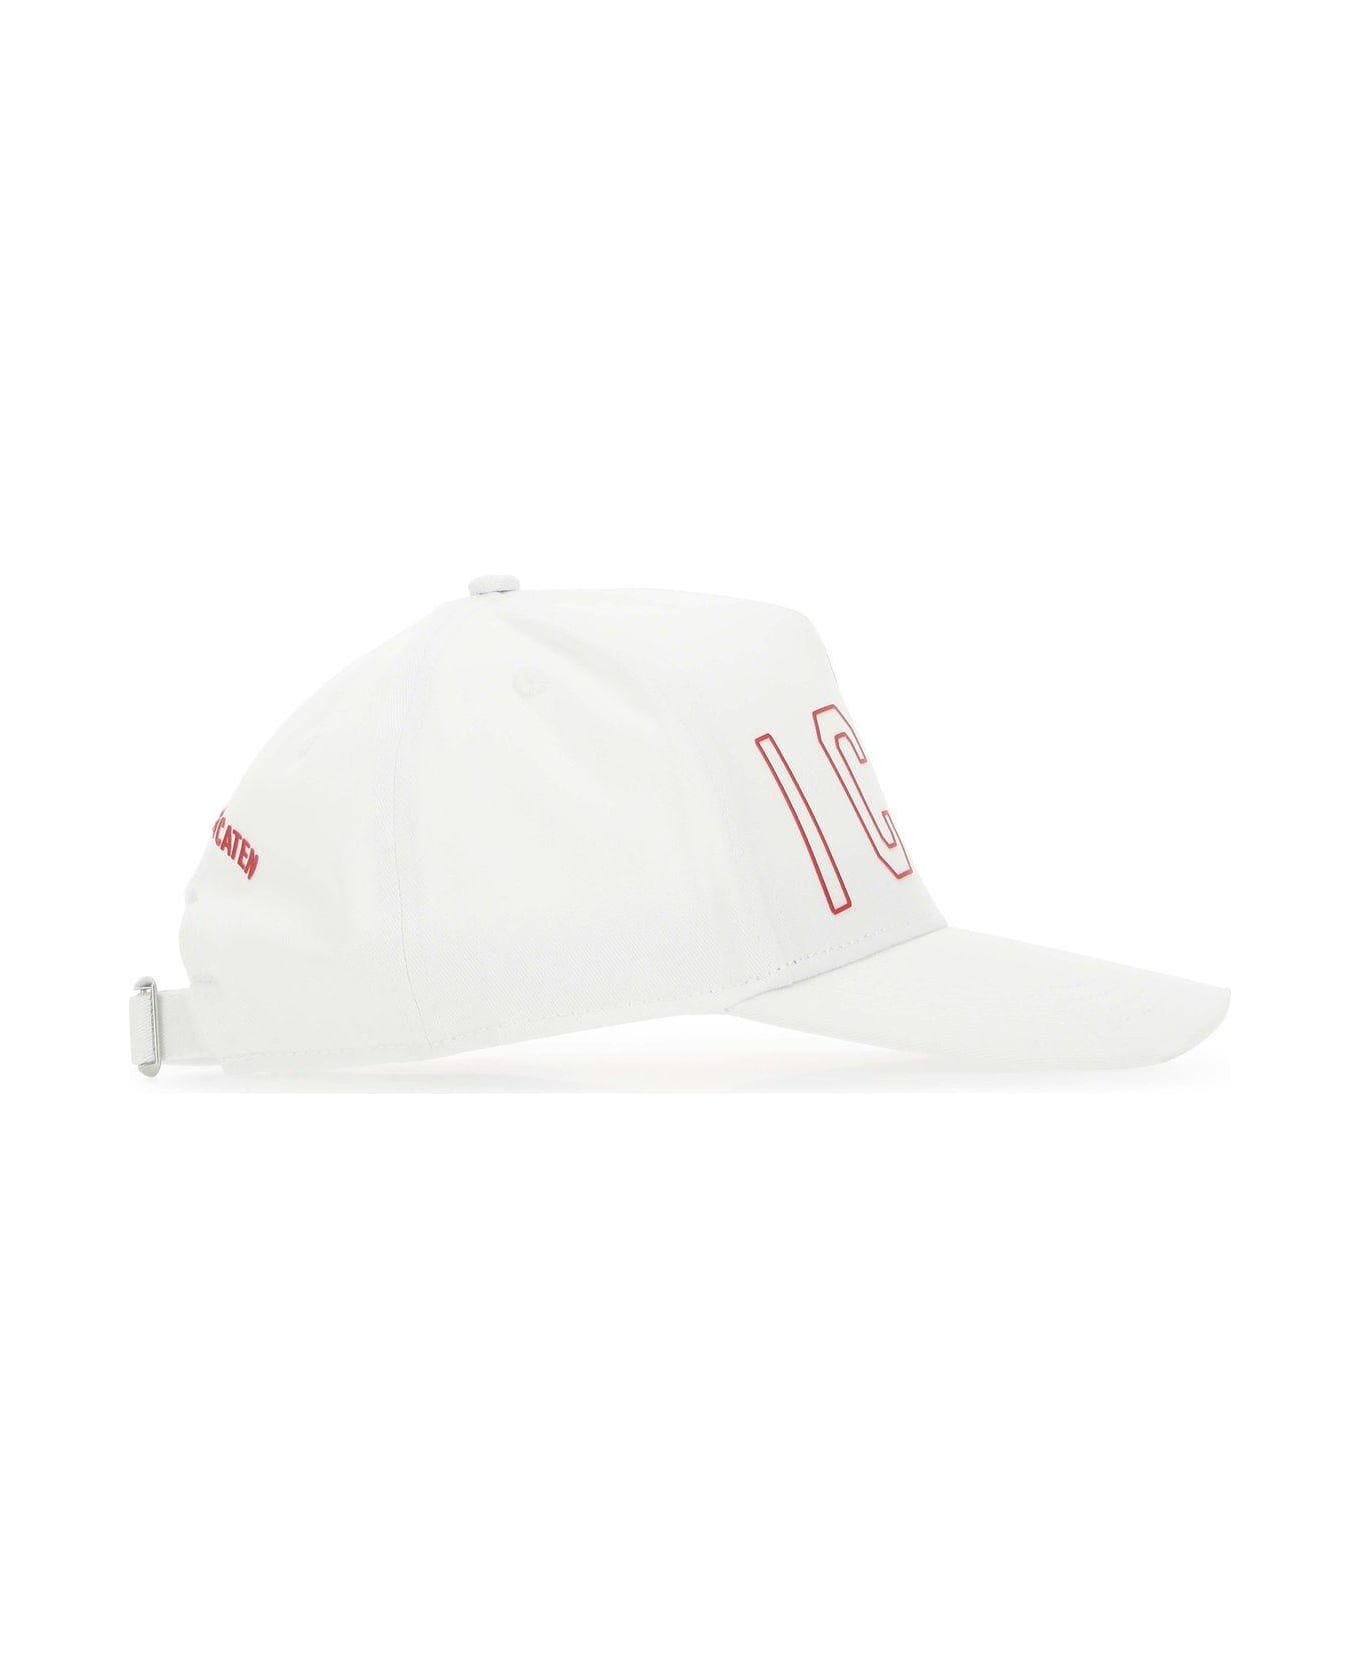 Dsquared2 White Cotton Baseball Cap 帽子